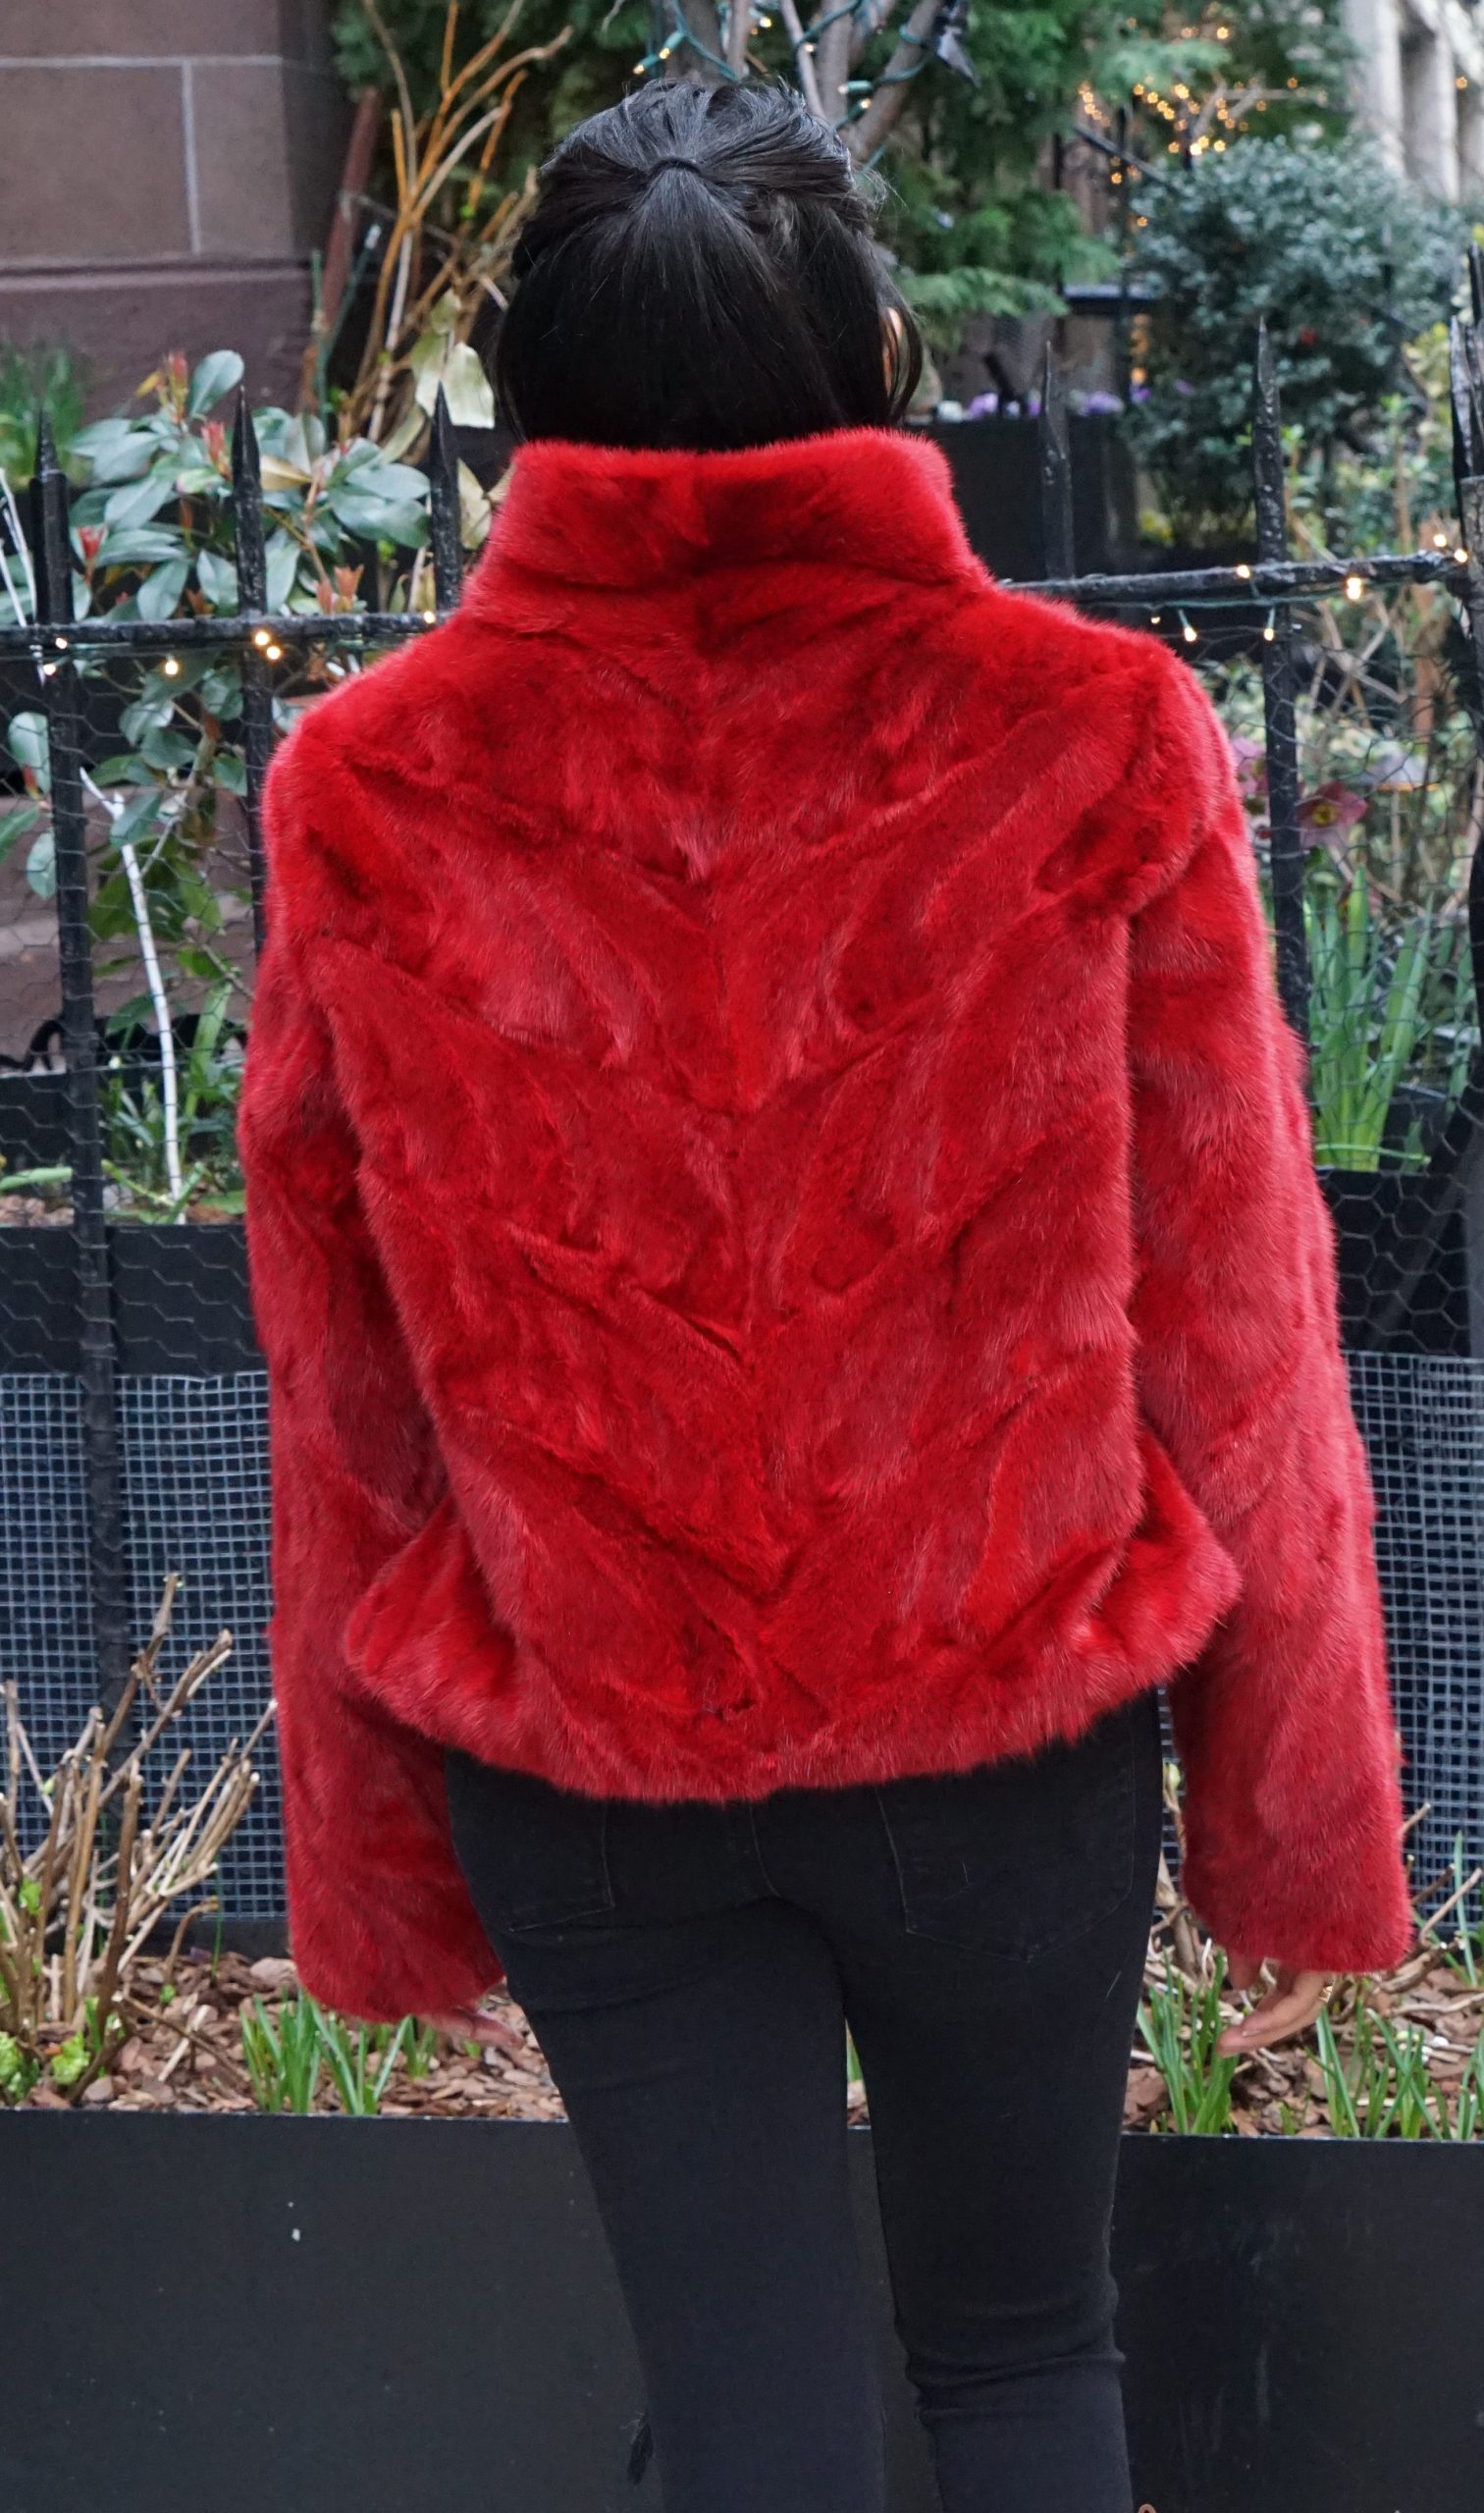 Black Poplin Jacket Red Fur Lined Hood 8373 – MARC KAUFMAN FURS